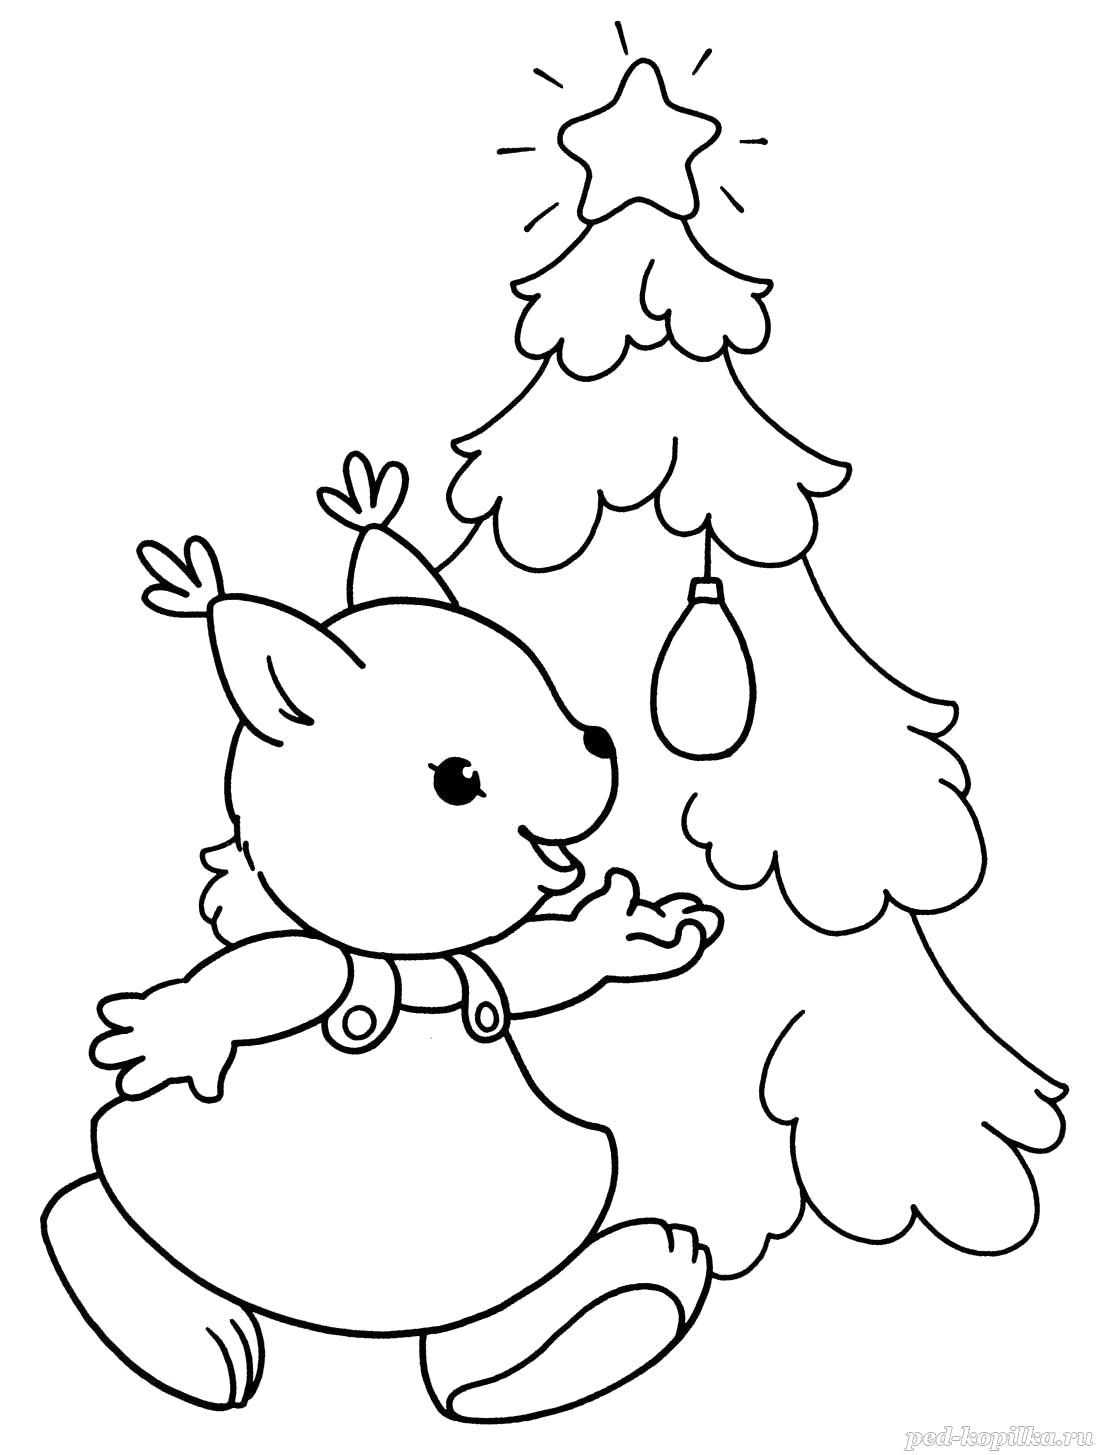 Название: Раскраска зайчик и елочка. Категория: новогодние. Теги: новогодние.